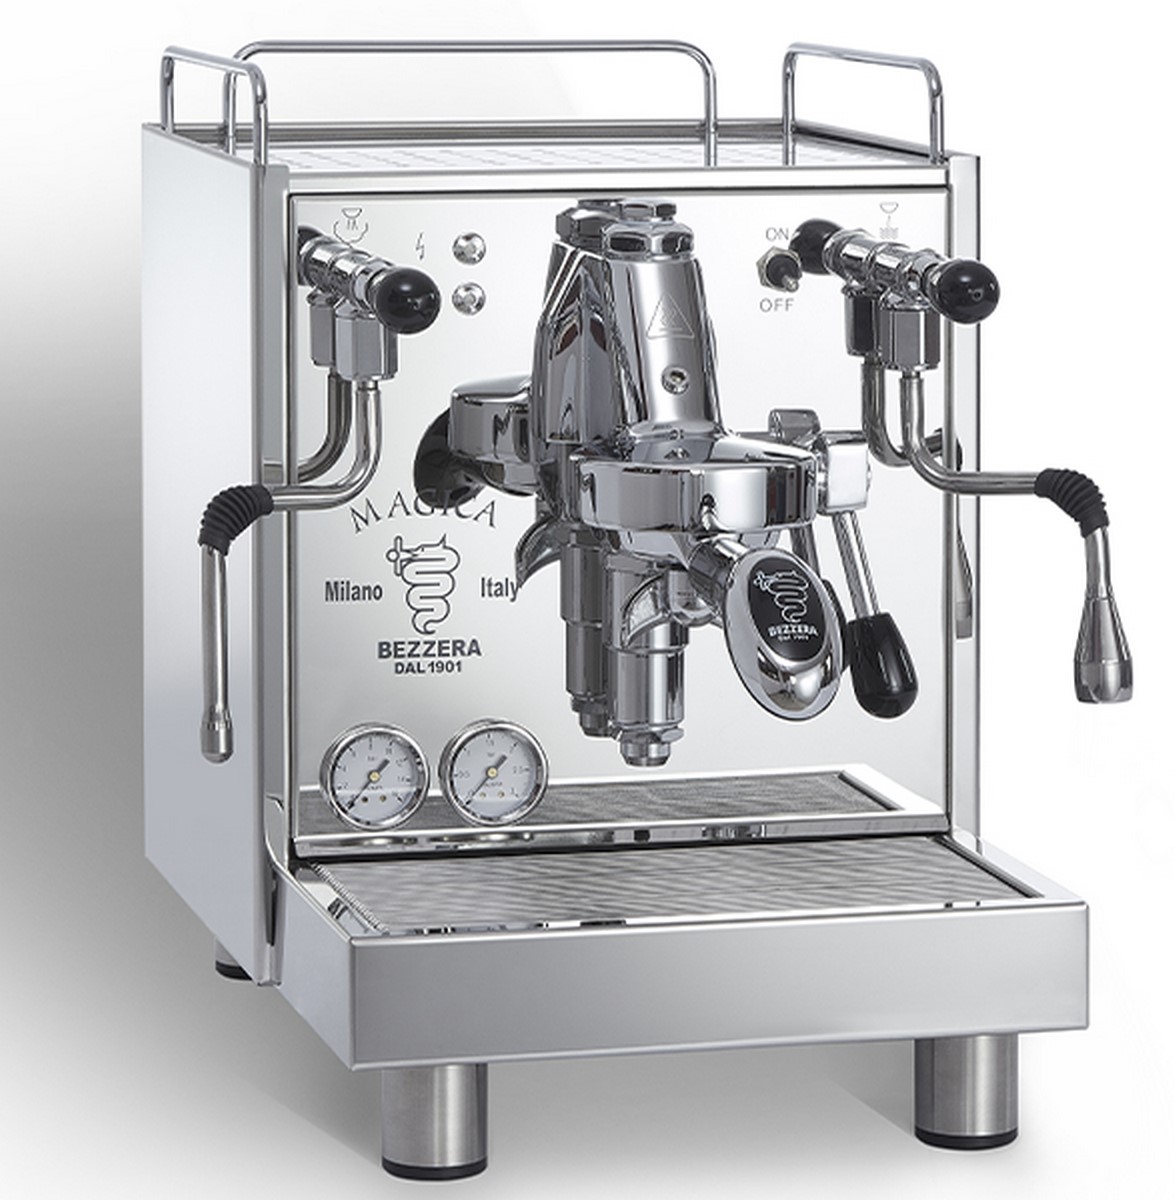 Acquista online BEZZERA Coffee Machine MAGICA S MN 